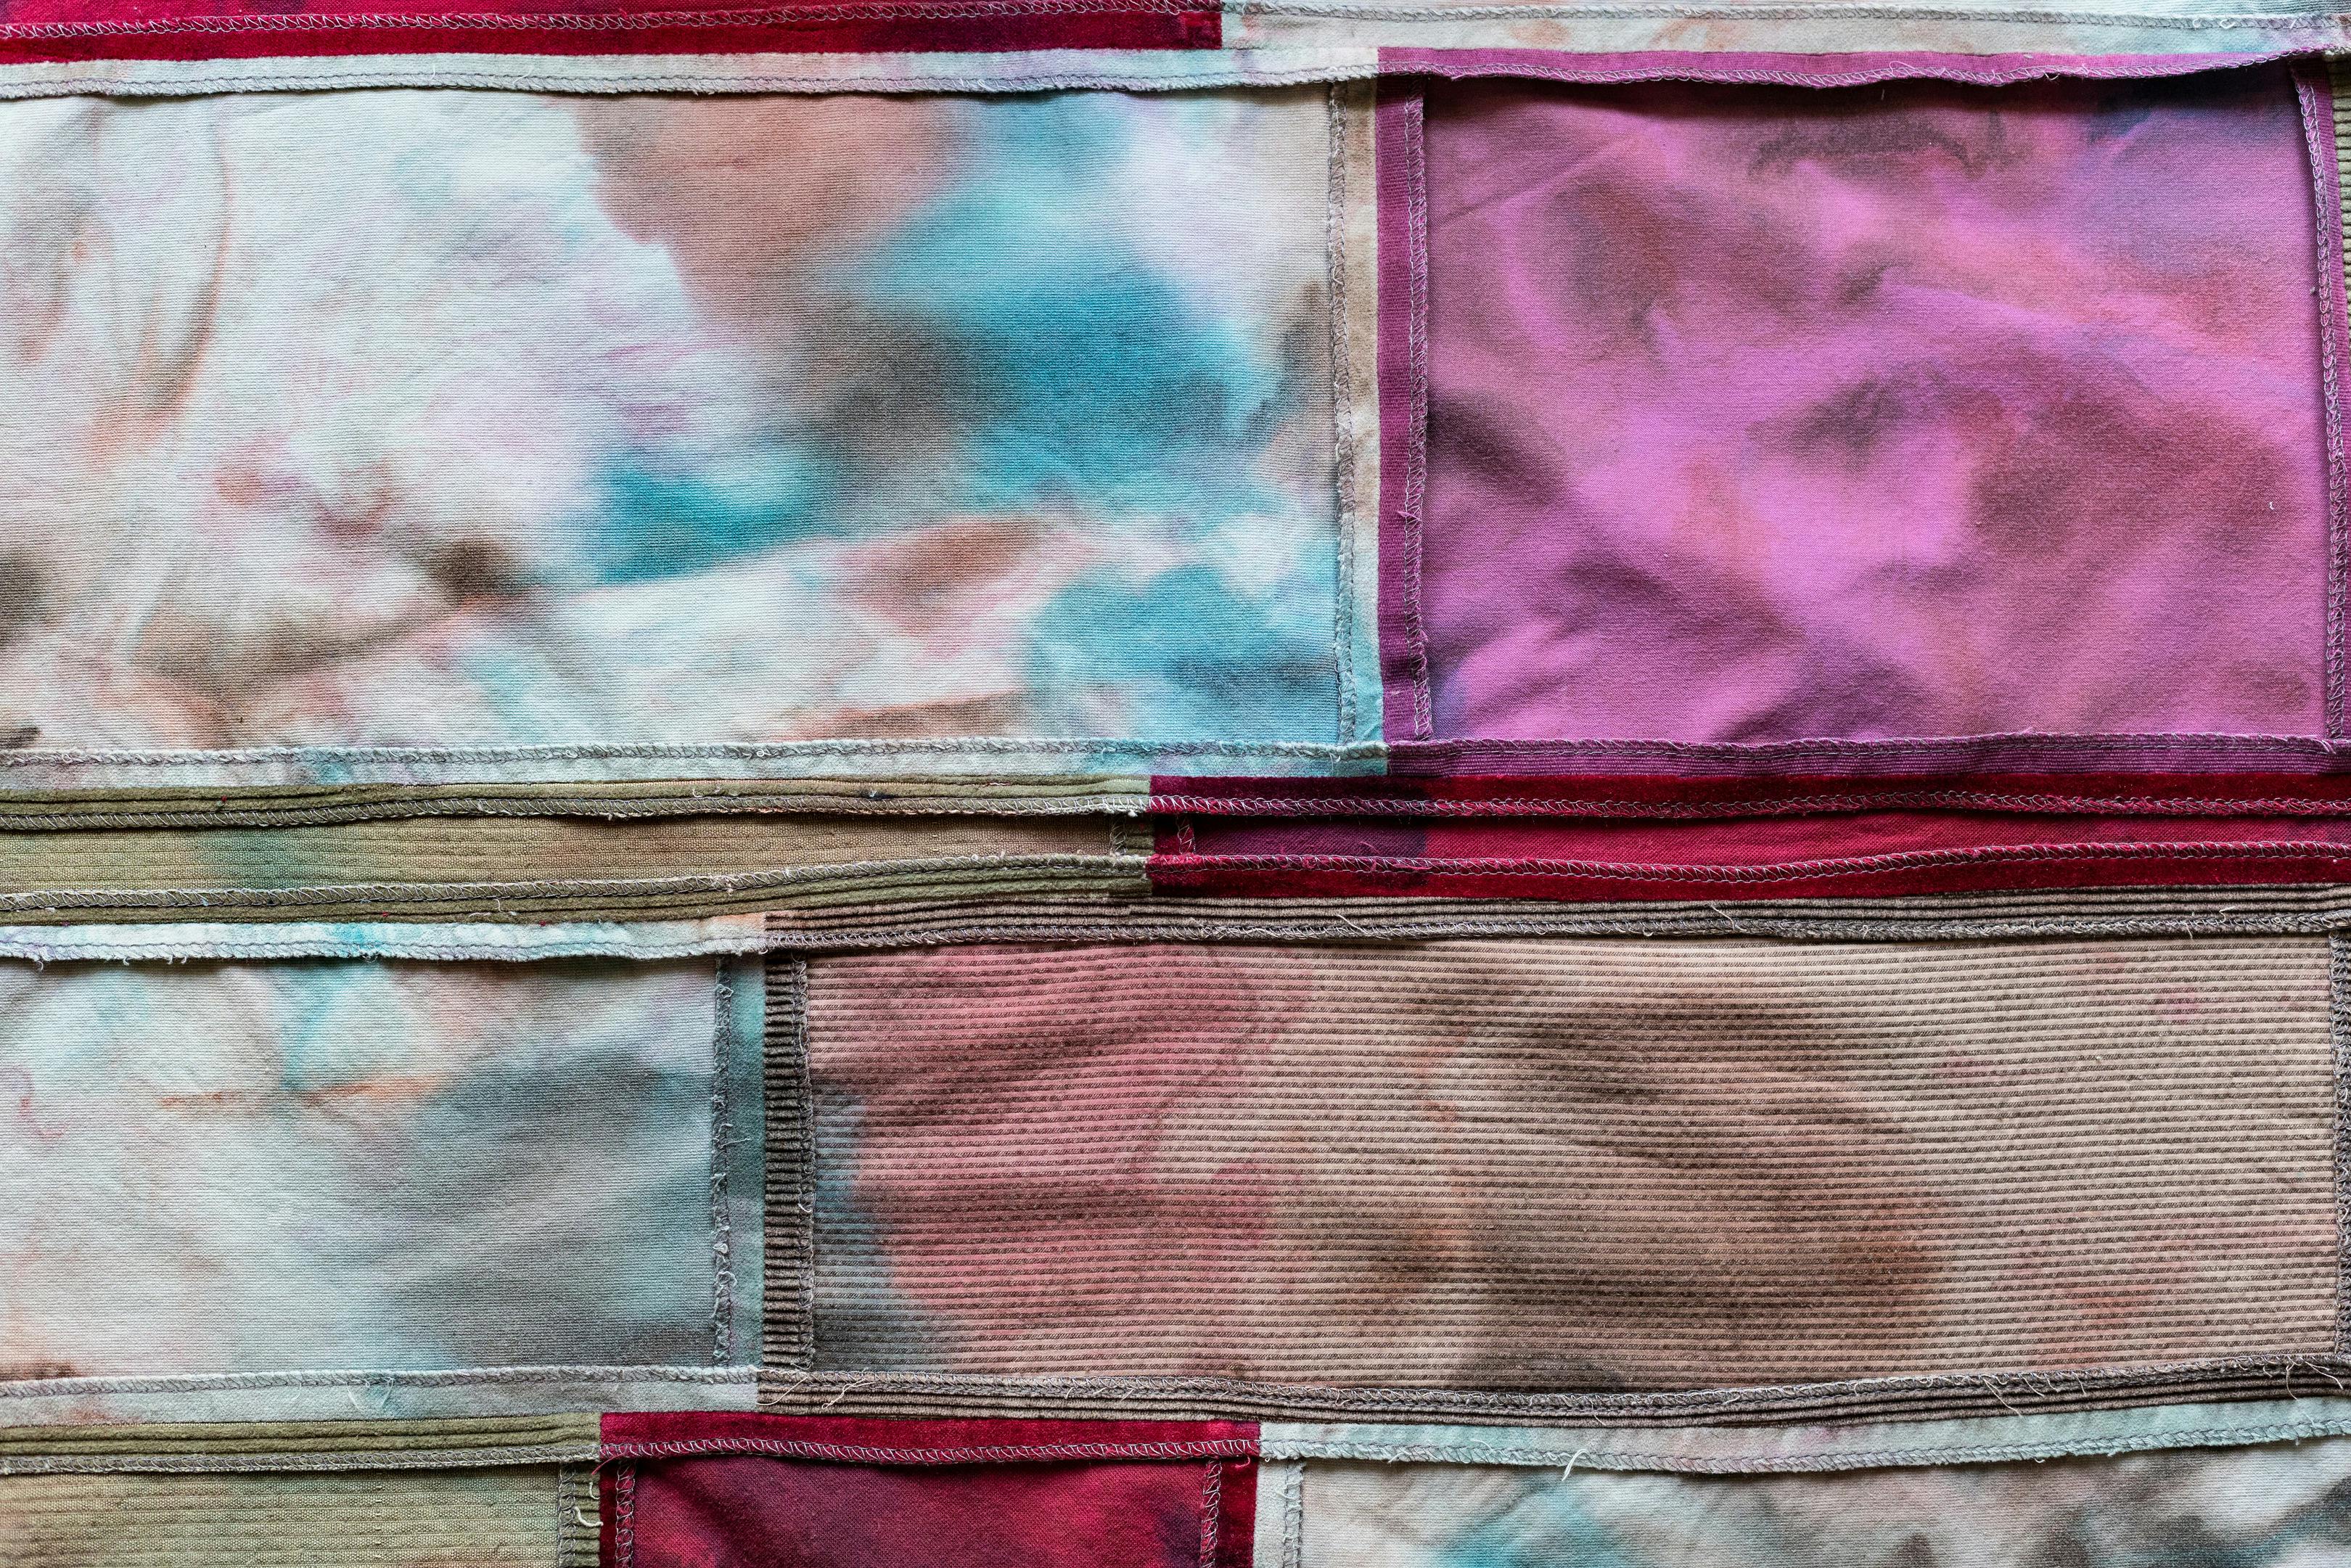  underside of velvet patchwork with hems showing